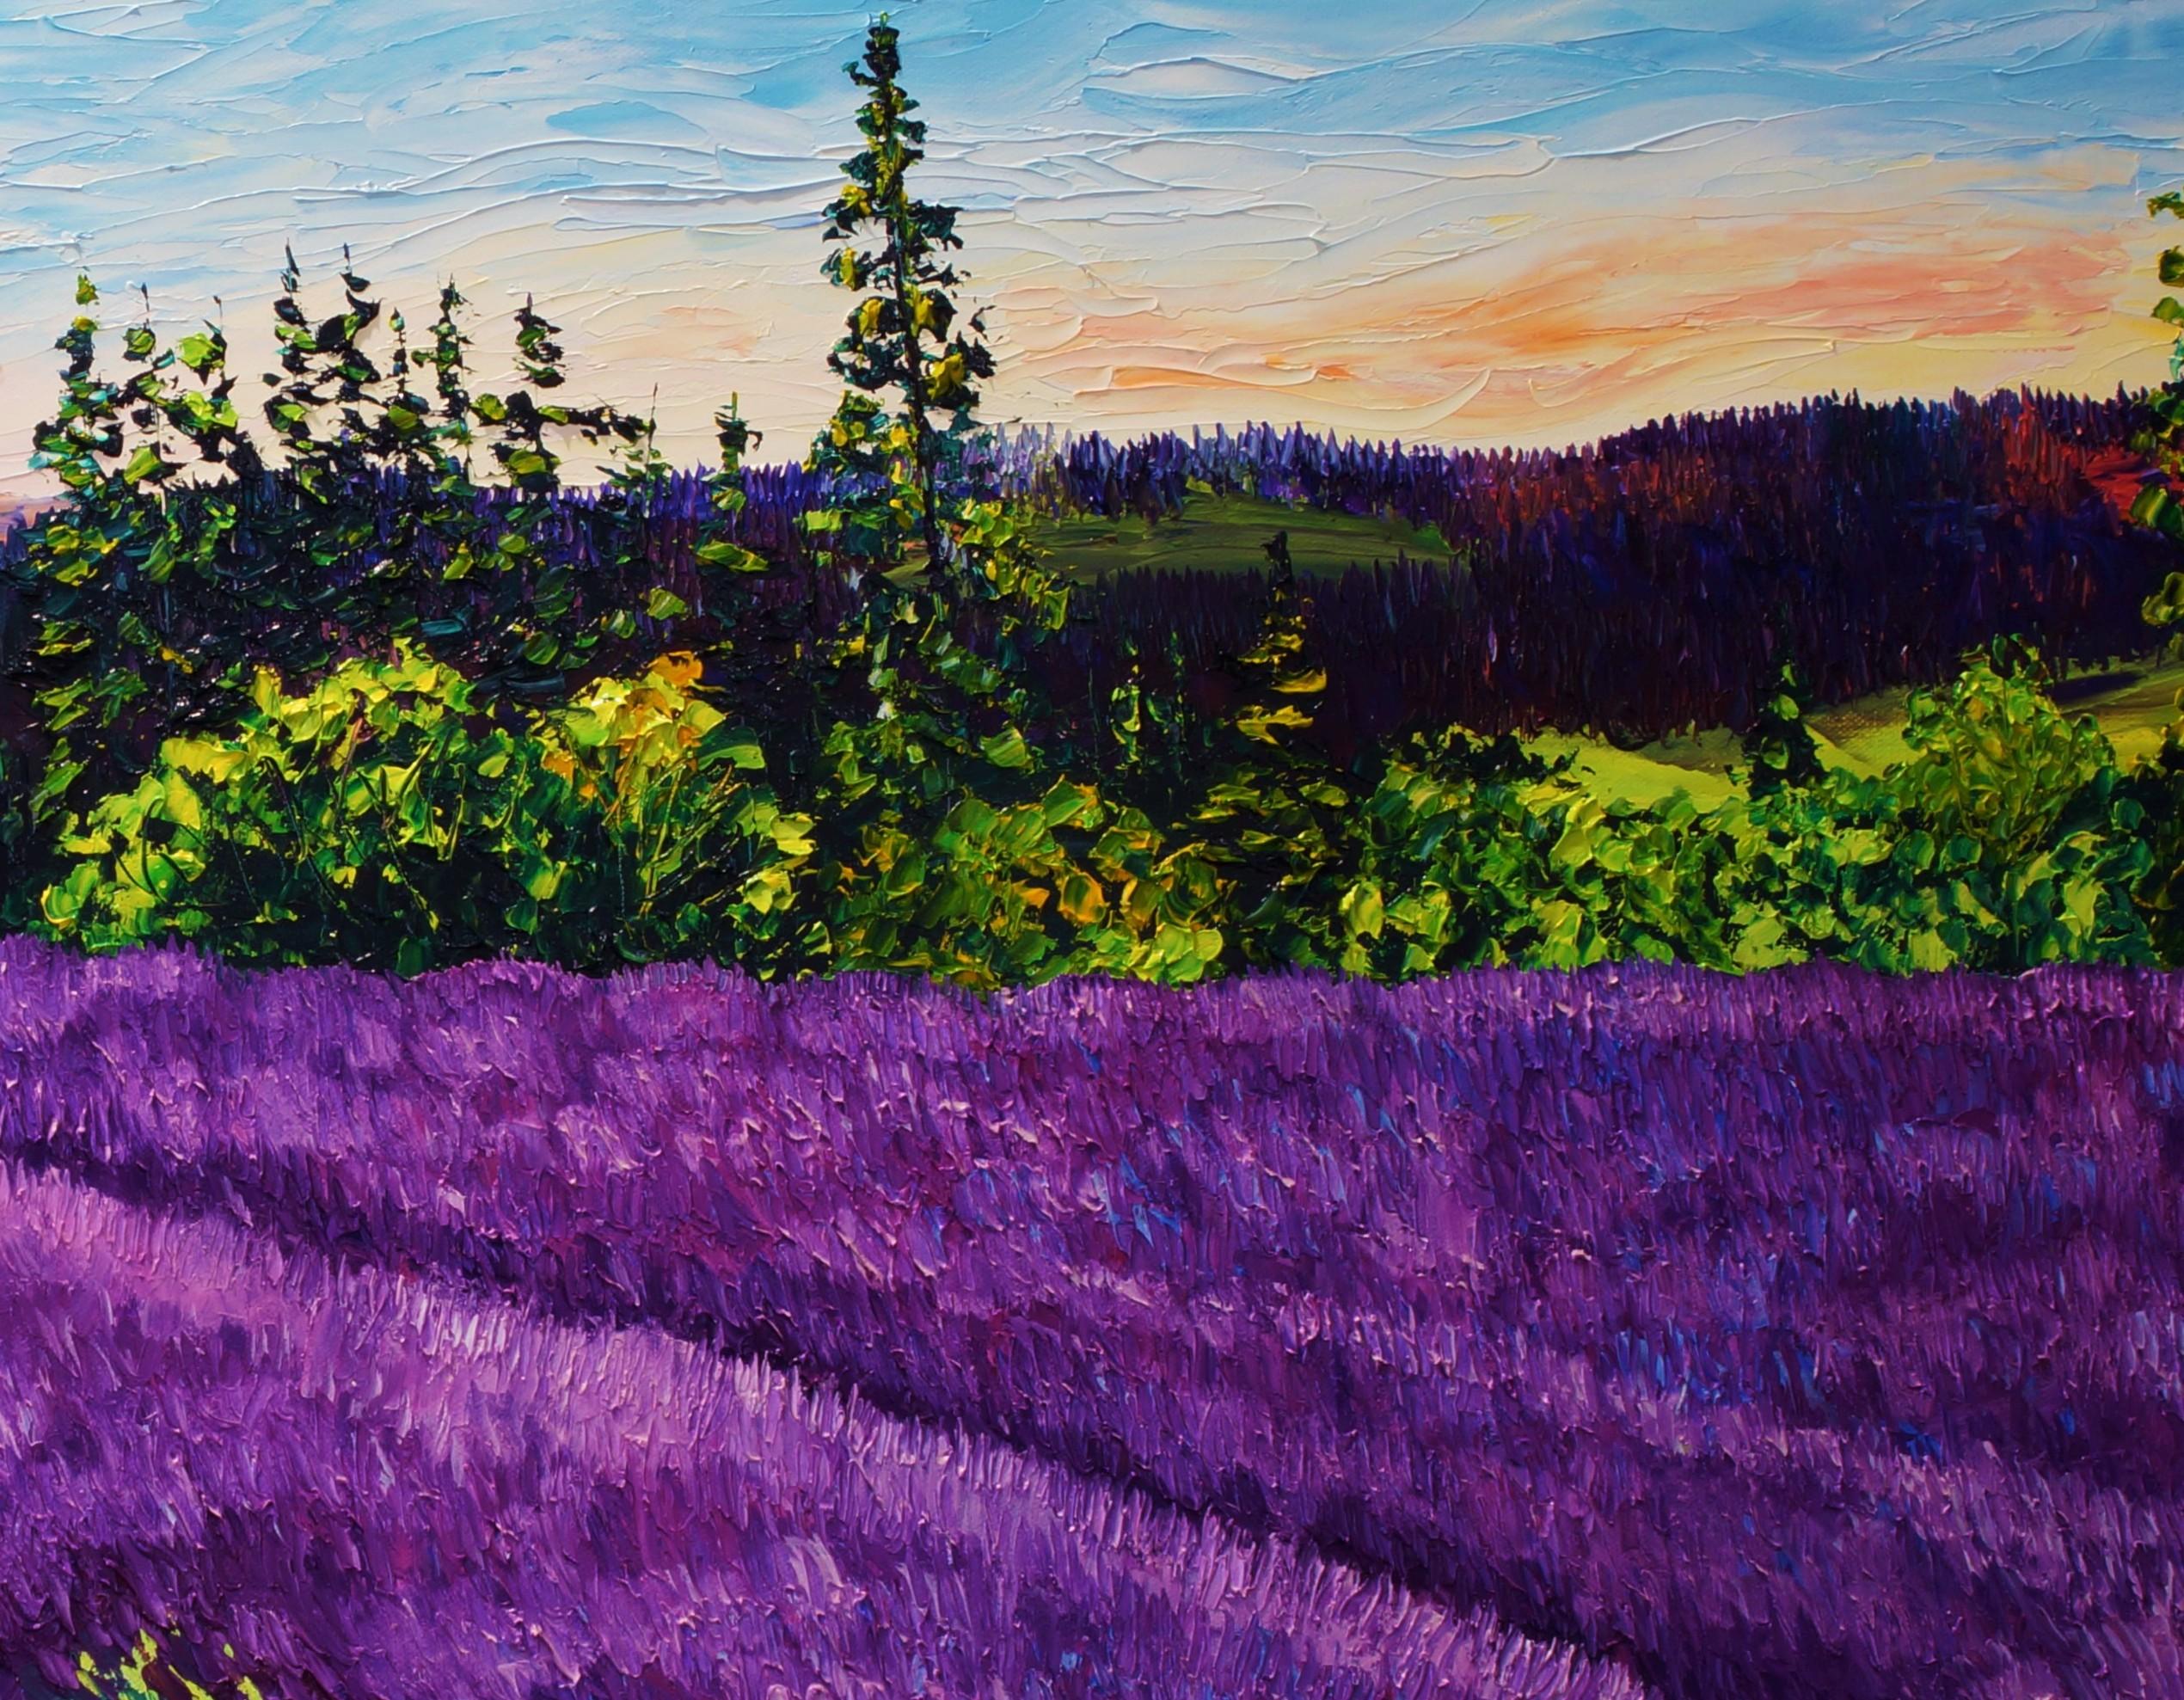 Lavender Melody, Original Contemporary Vibrant Impressionist Landscape Painting
24